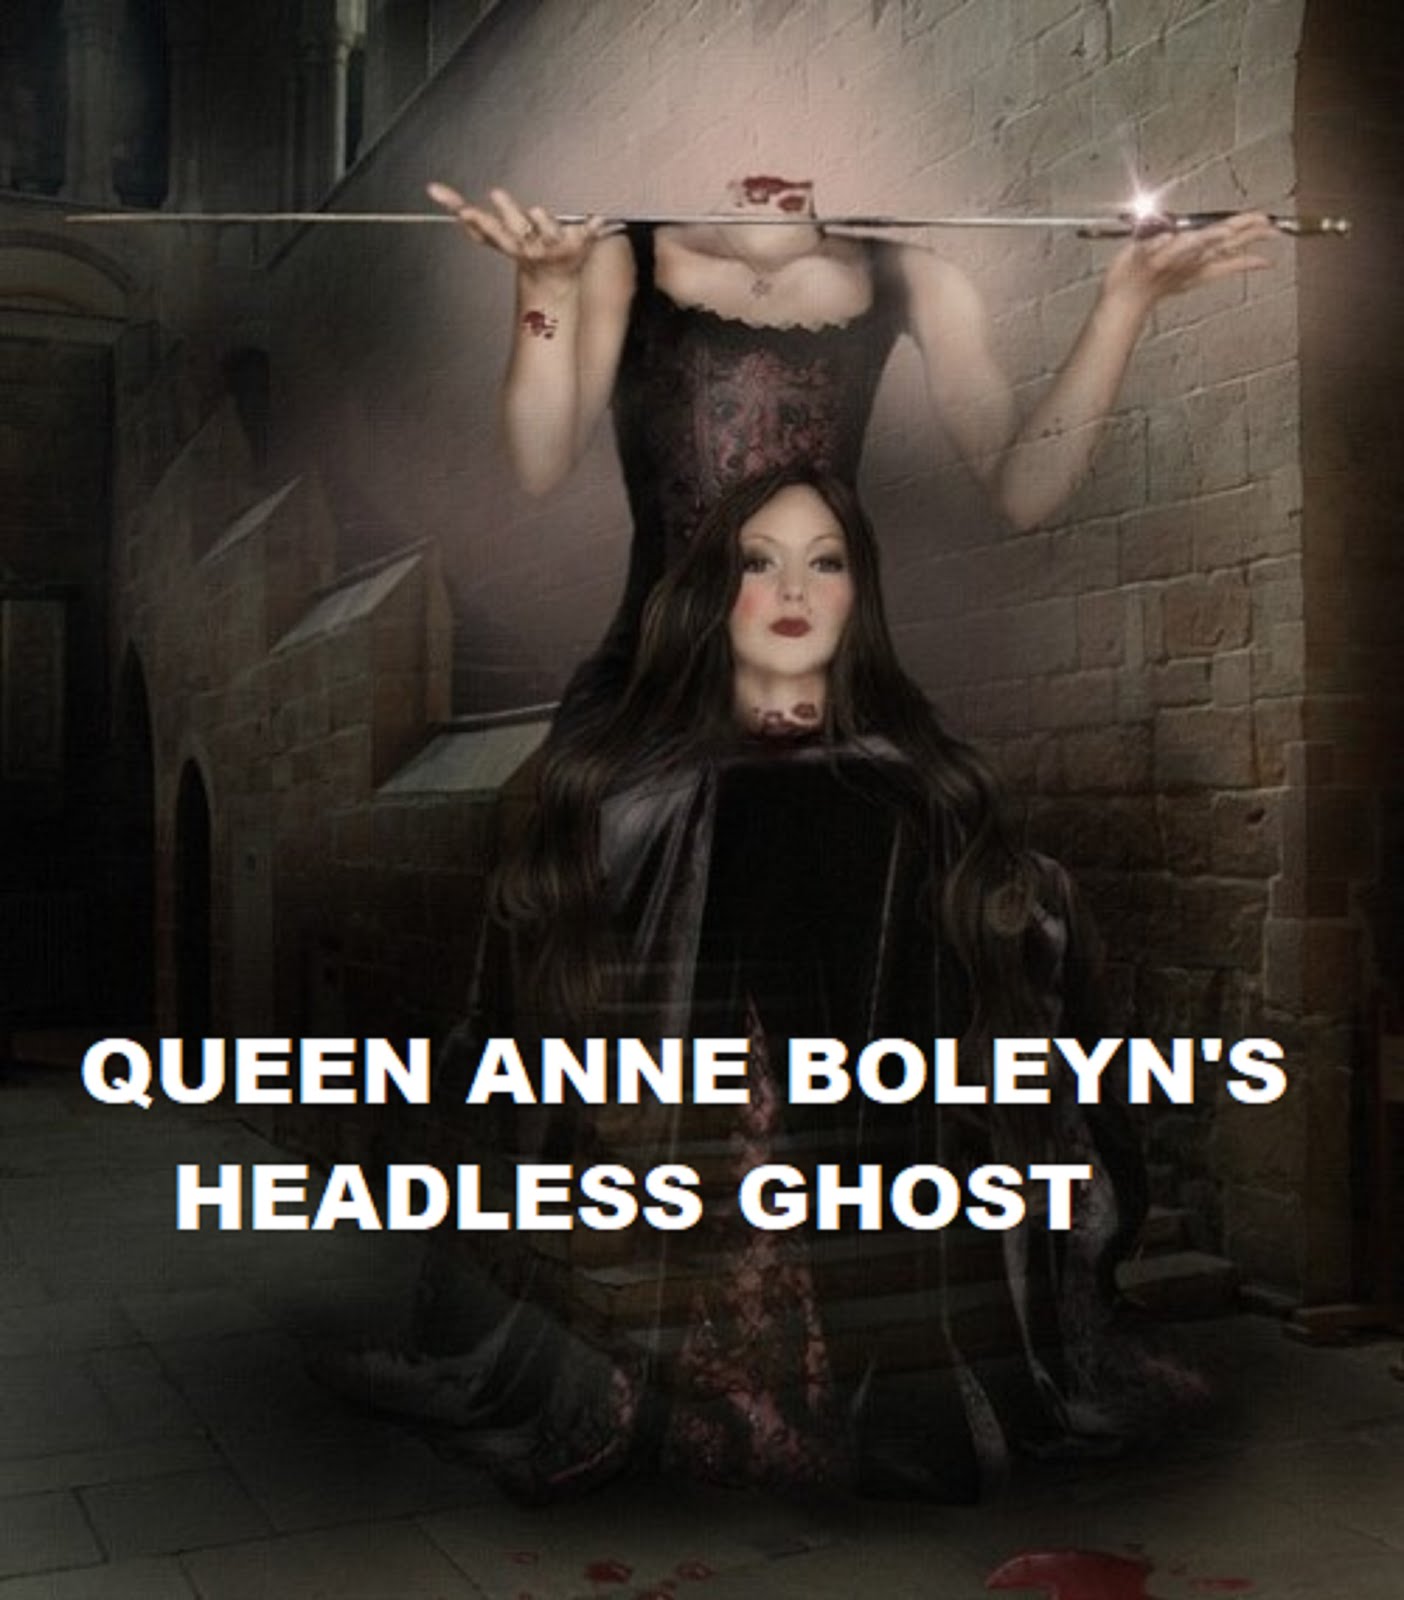 QUEEN ANNE BOLEYN'S HEADLESS GHOST